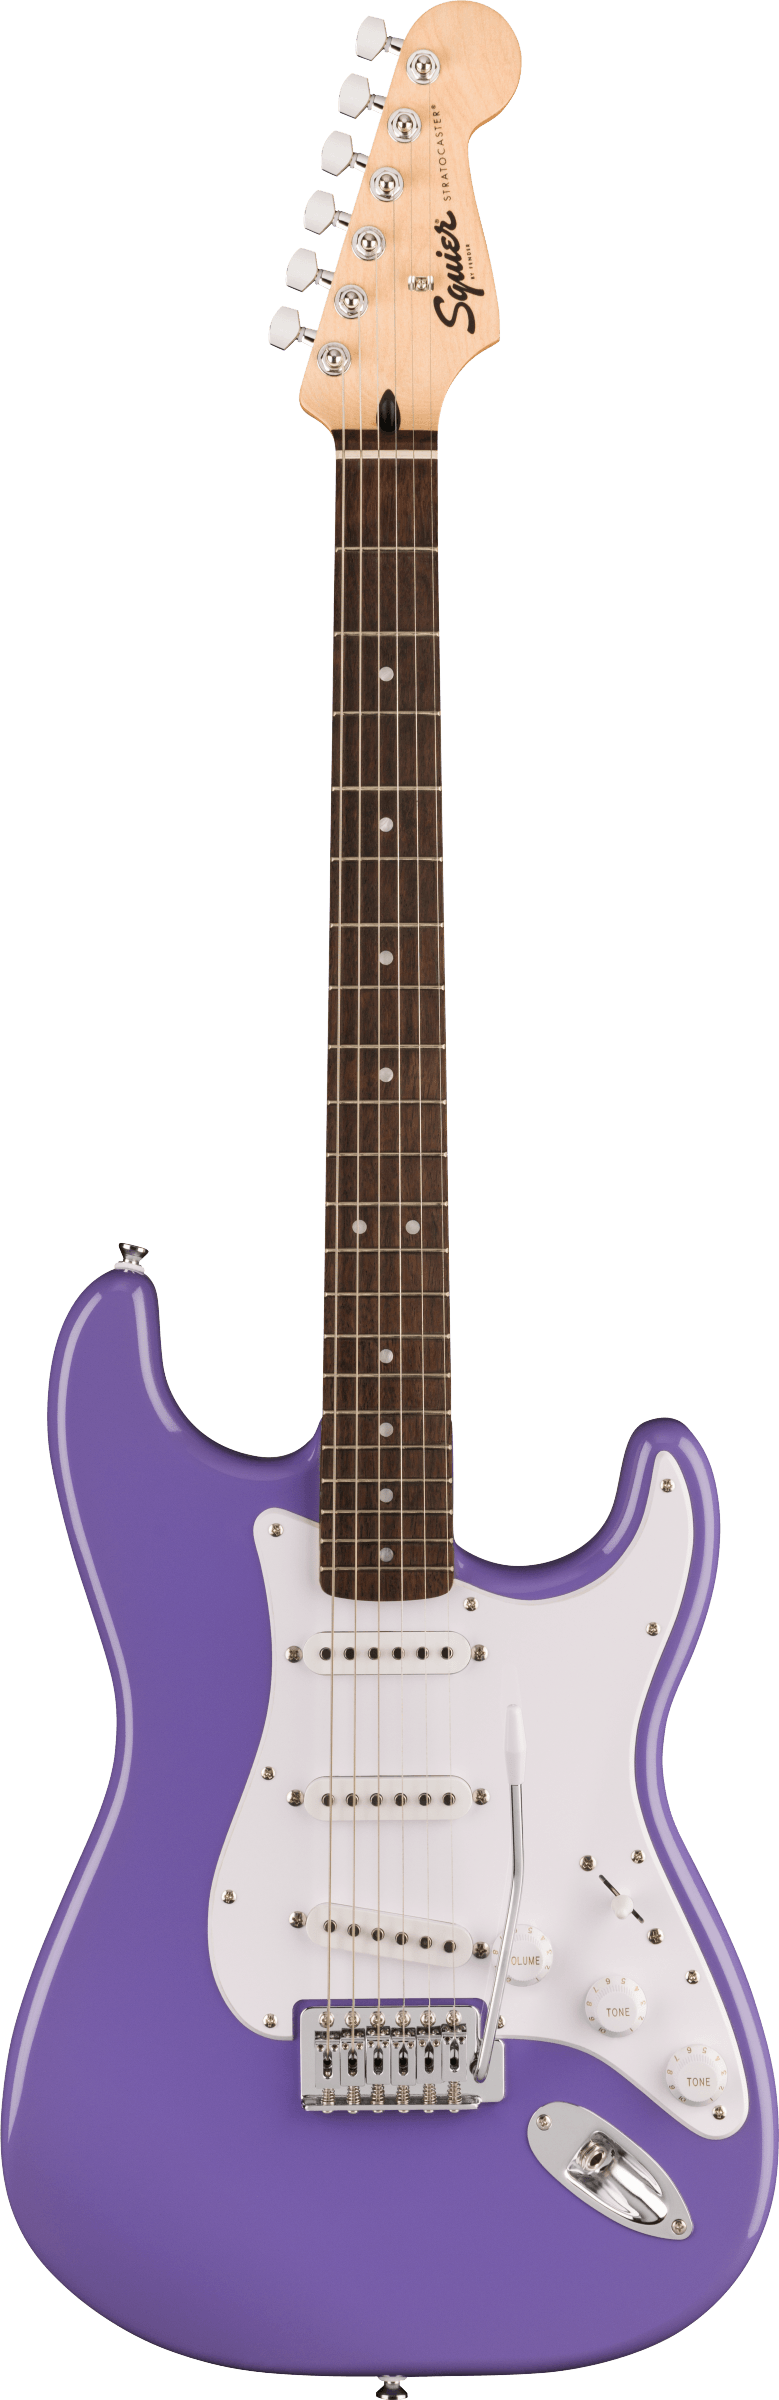 Squier Sonic Stratocaster Ultraviolet - White Pickguard